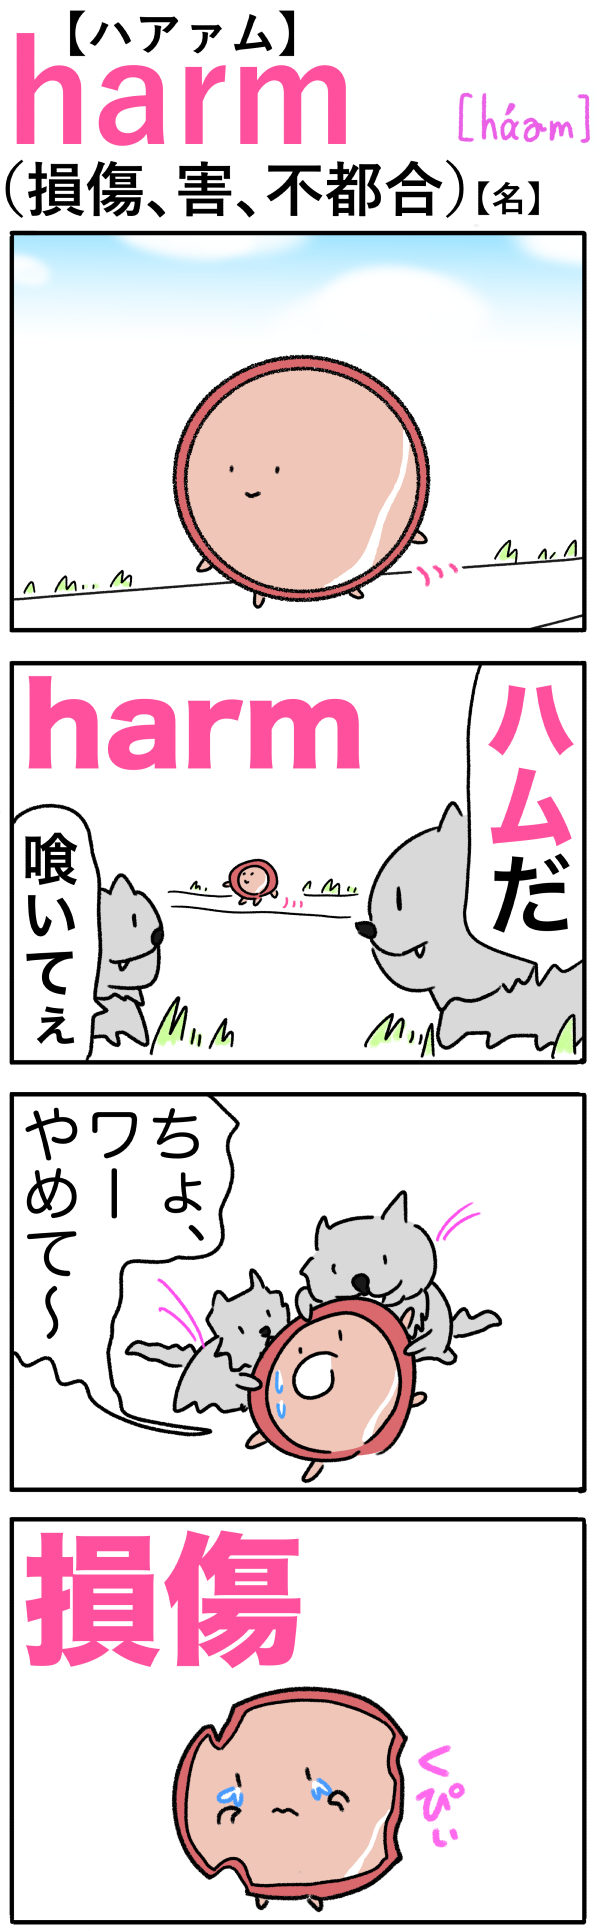 harm（損傷）の語呂合わせ英単語